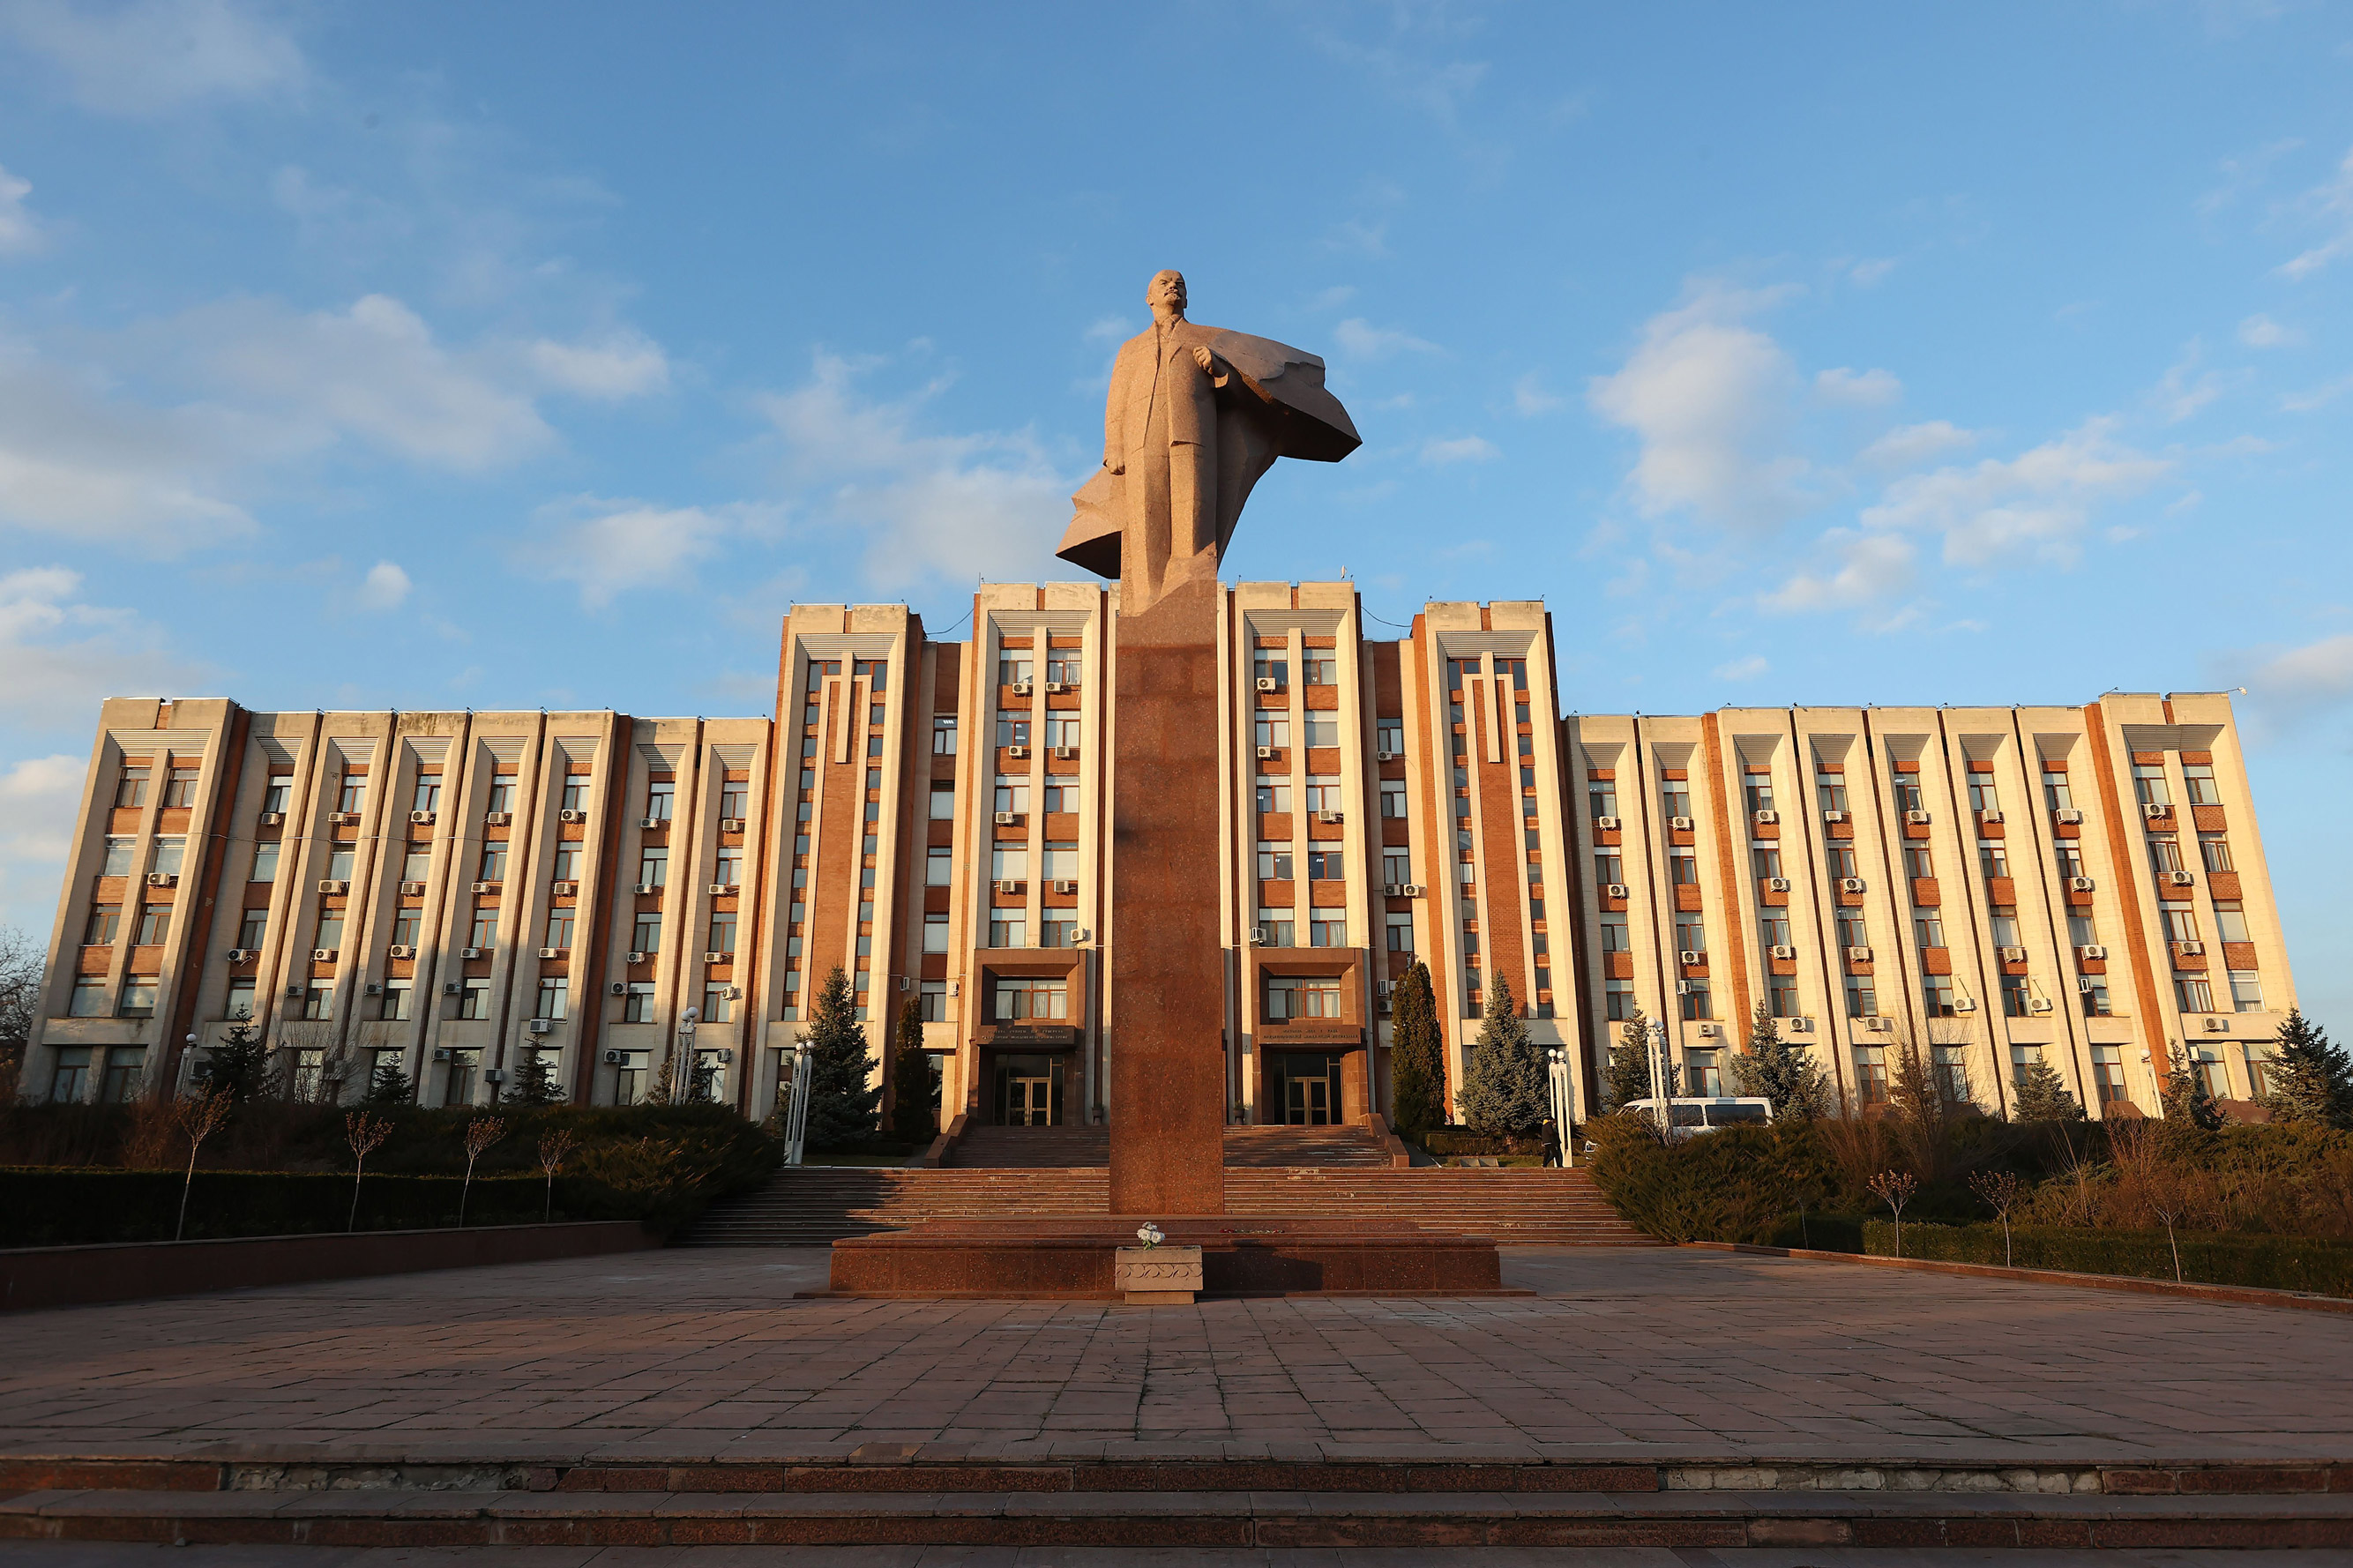 A tour of the city council of Tiraspol, the capital of Transnistria, Moldova on 25 November 2021.